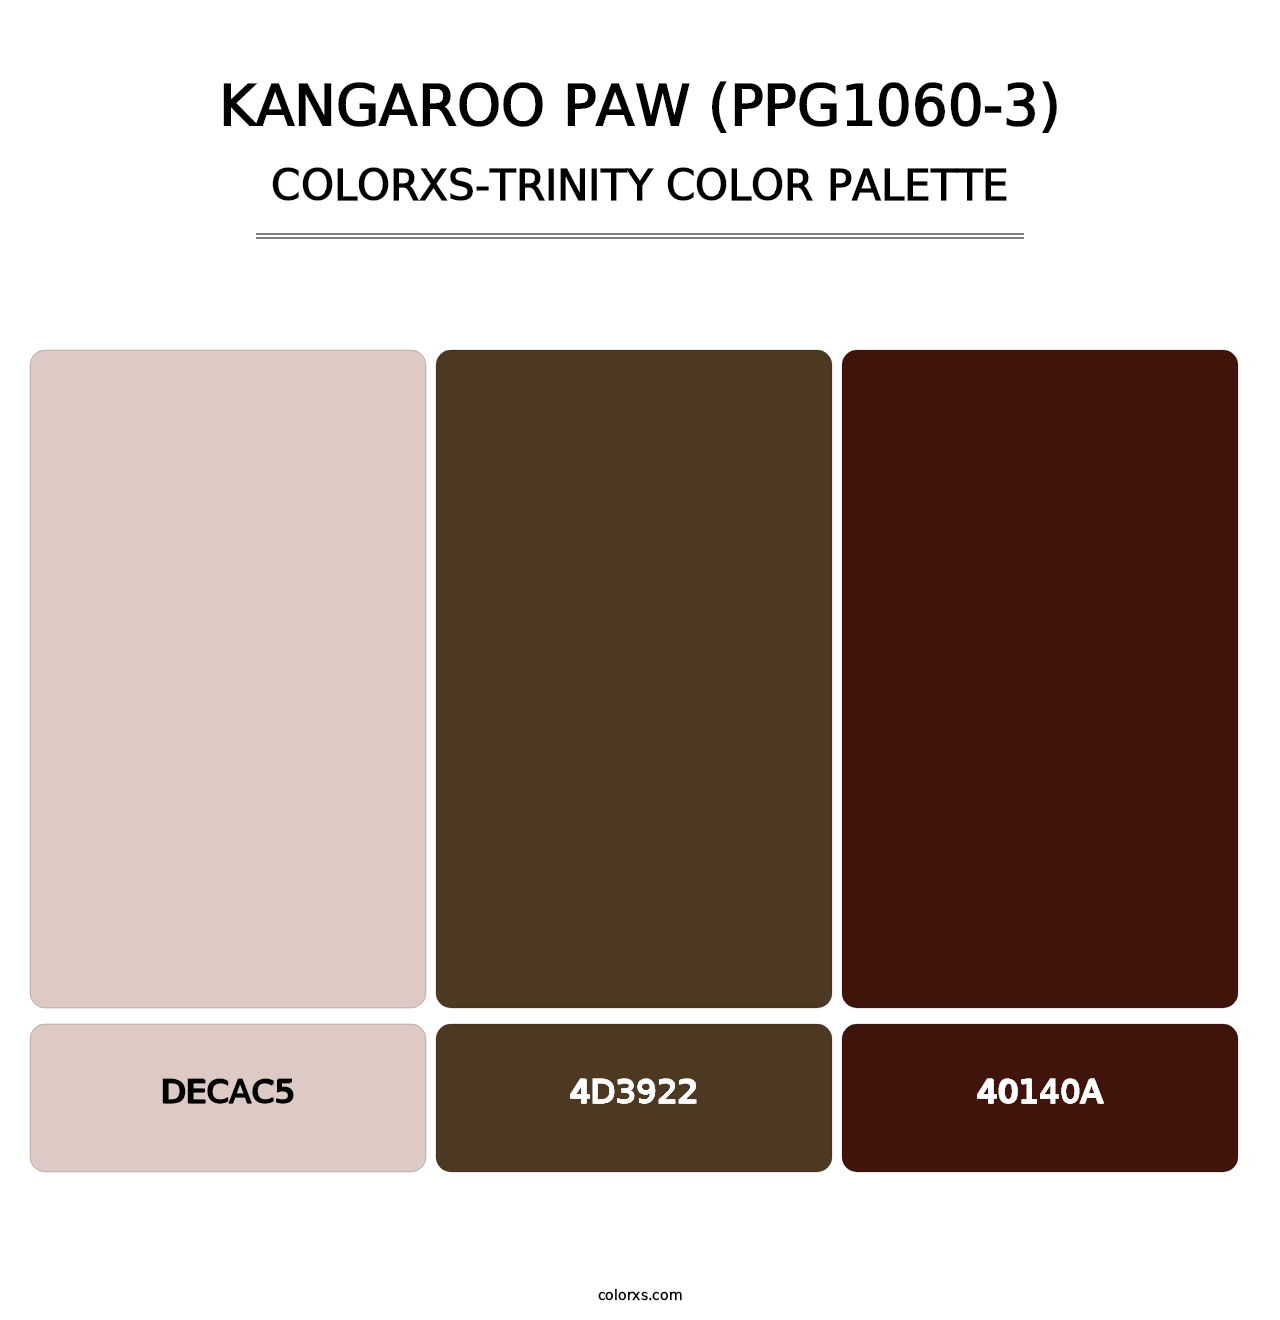 Kangaroo Paw (PPG1060-3) - Colorxs Trinity Palette